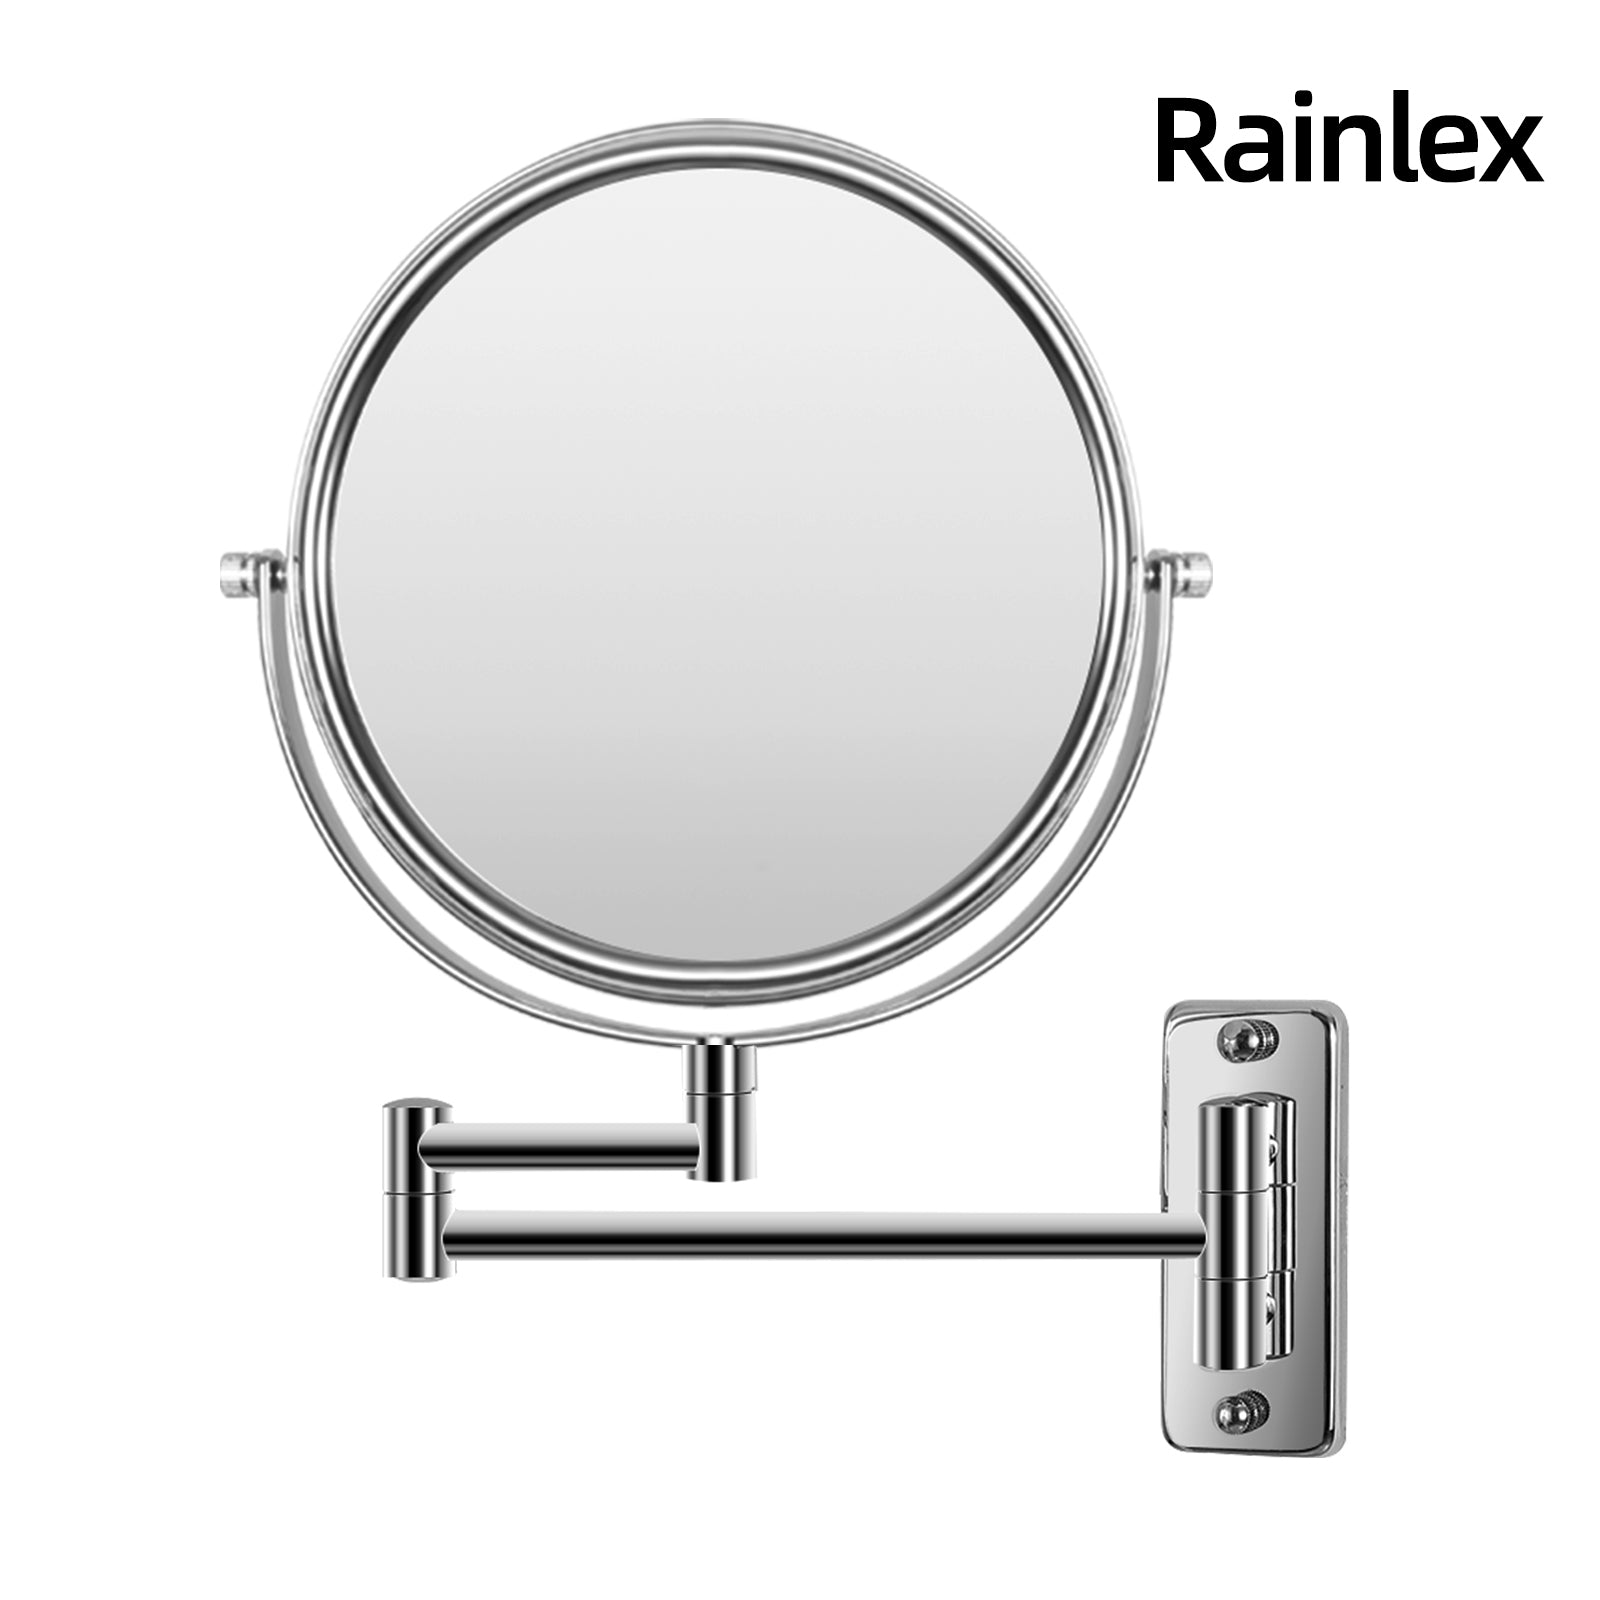 Rainlex 8-inch Wall Mounted Makeup Vanity Mirror